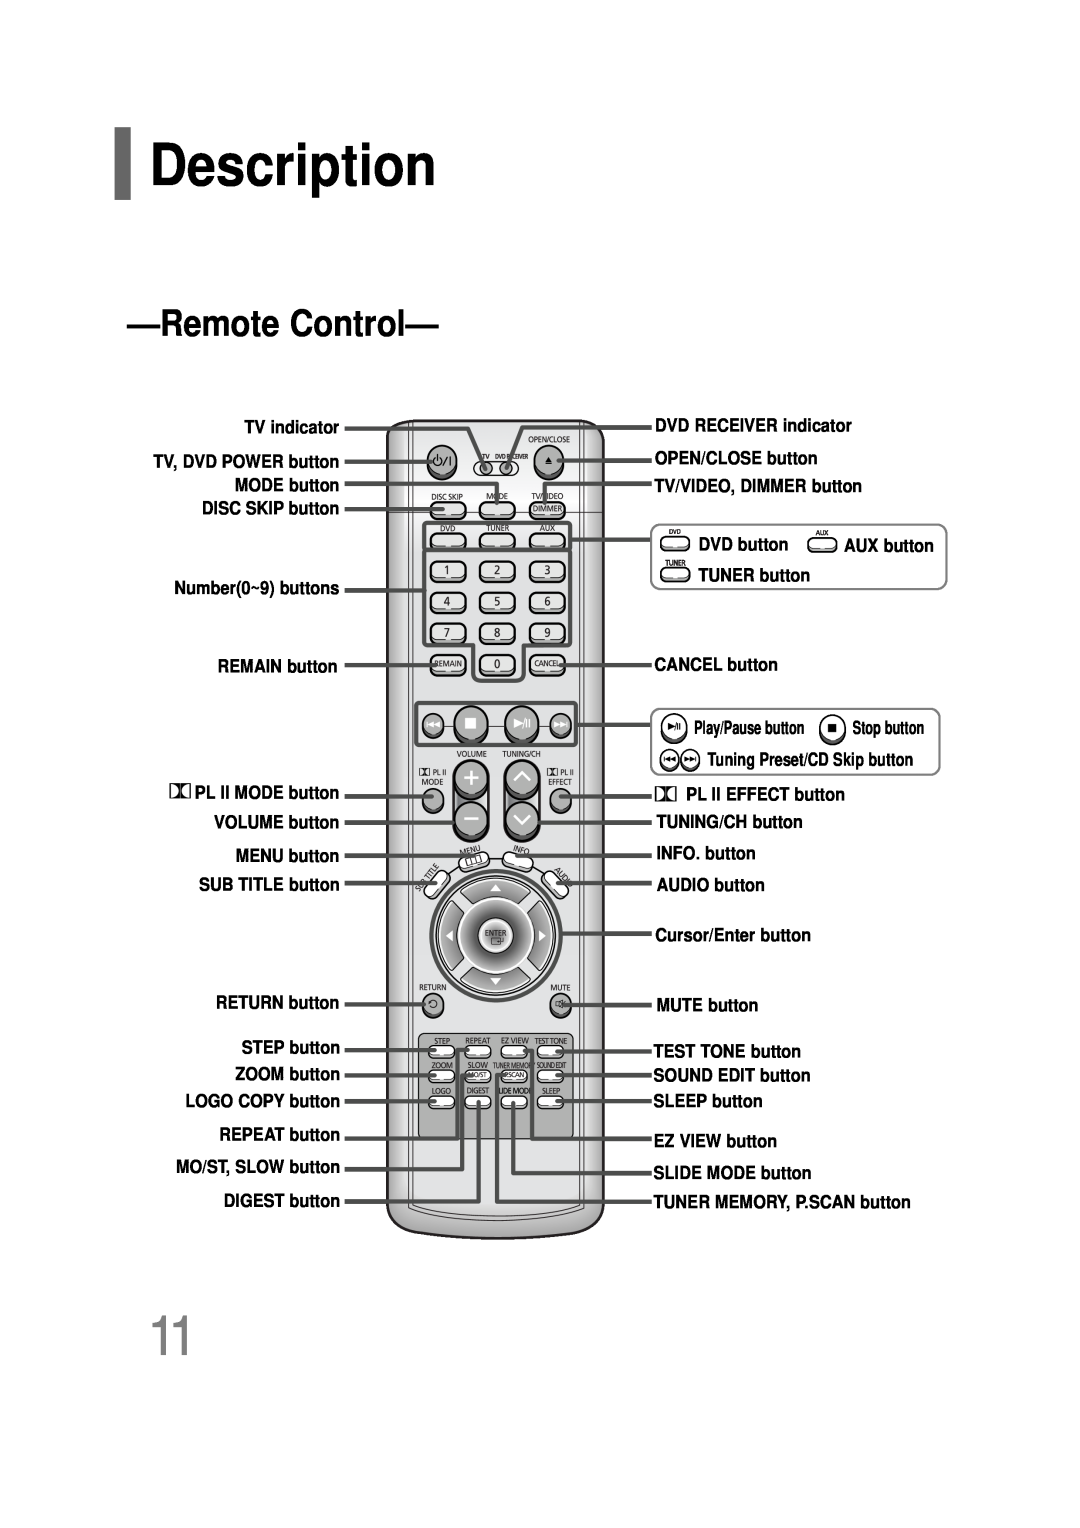 Samsung AH68-01701V RemoteControl, Description, TV indicator TV, DVD POWER button MODE button, TV/VIDEO, DIMMER button 